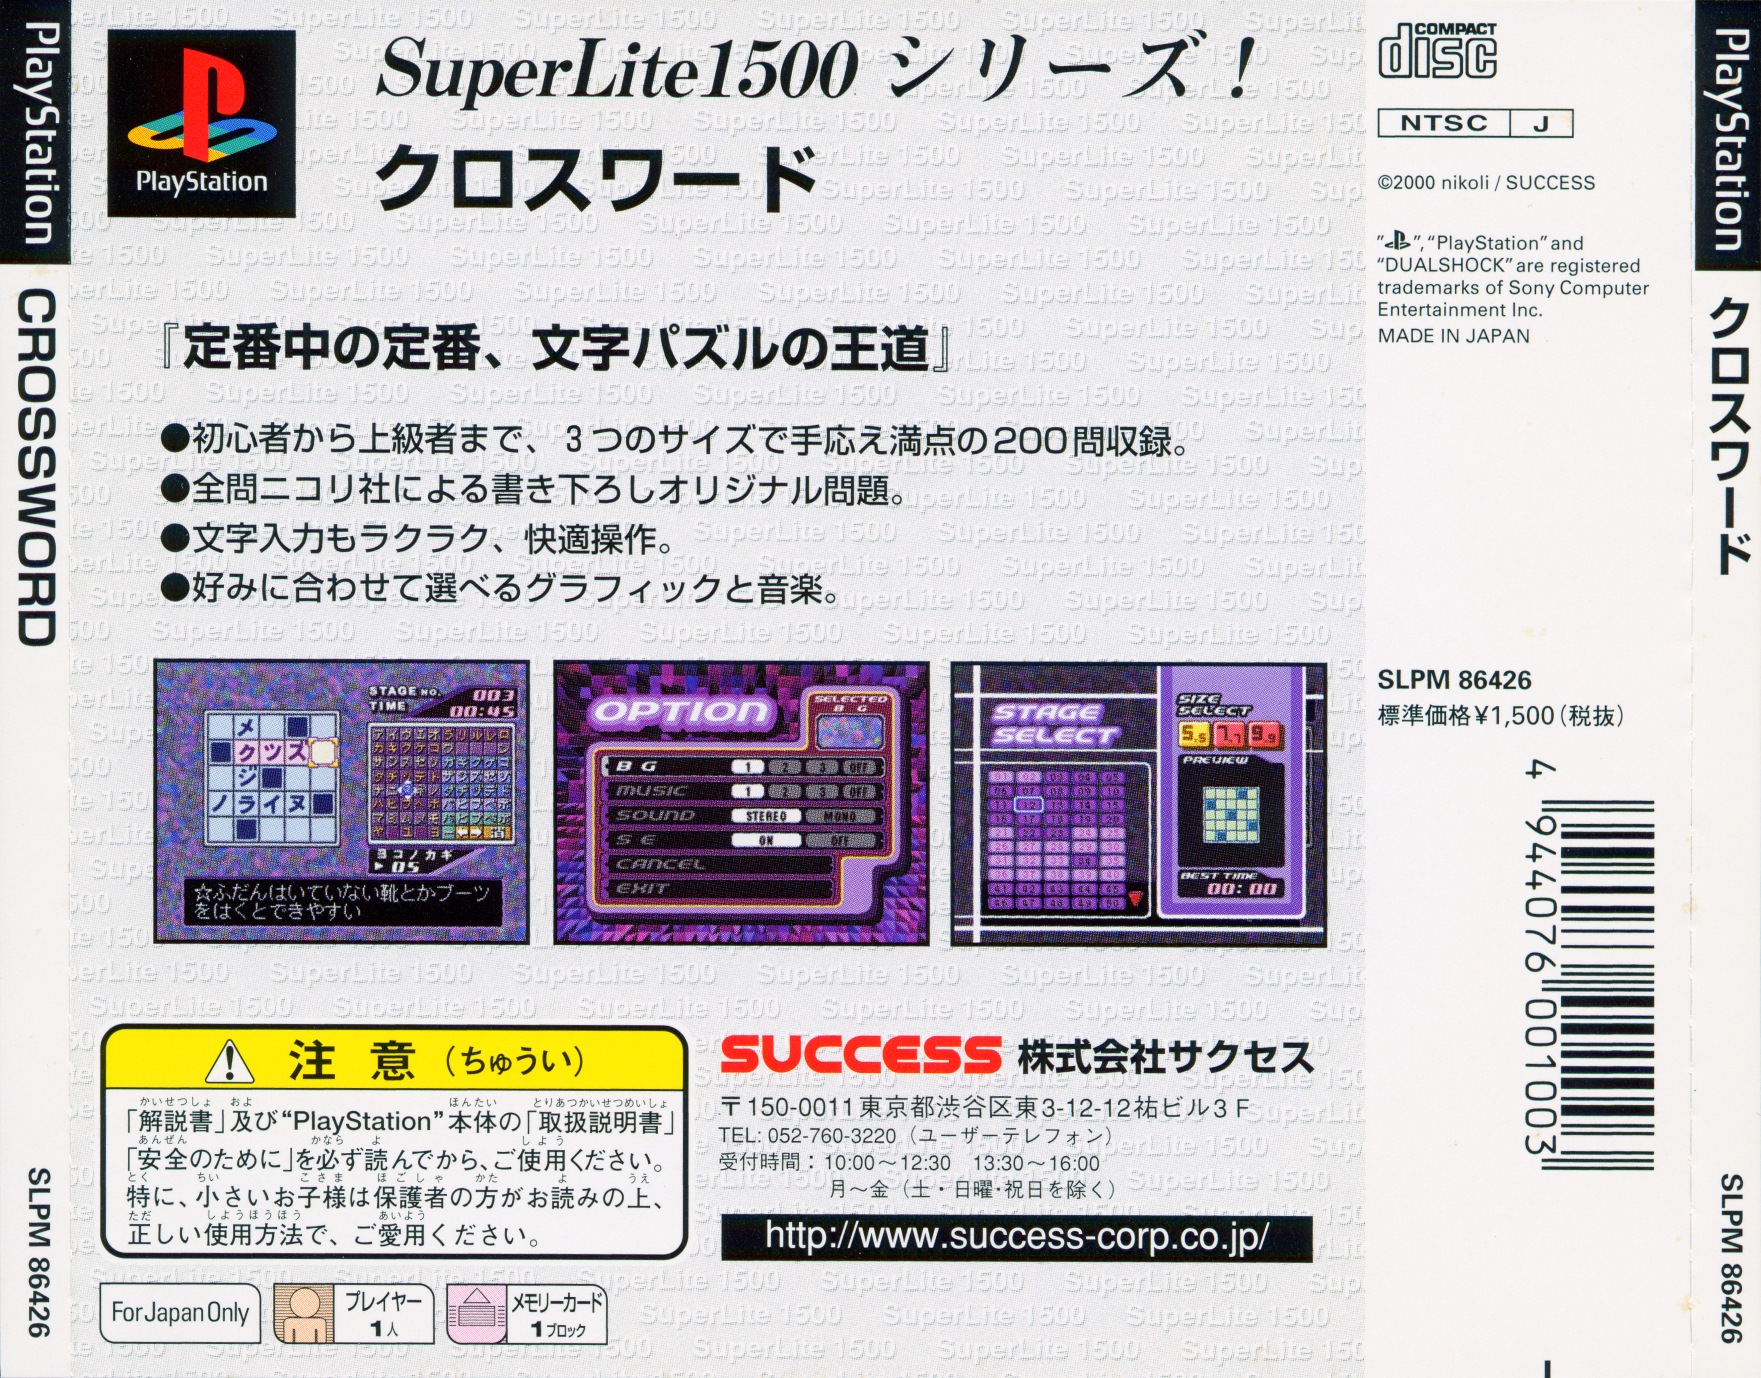 SuperLite 1500 Series: Crossword Images LaunchBox Games Database